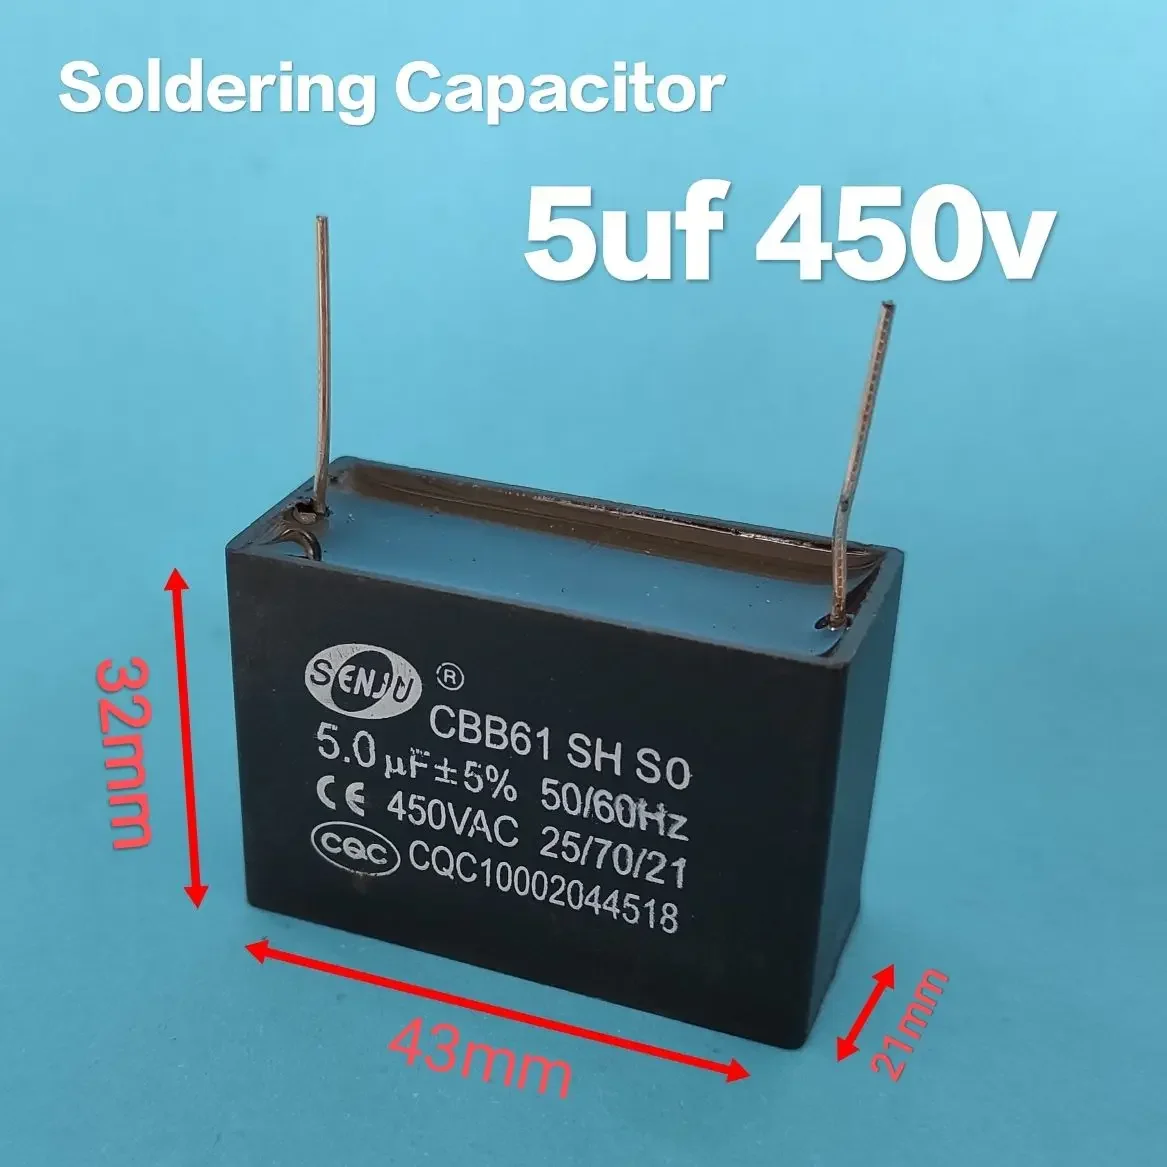 1 biji 5uf 450v Fan capacitor pcb board capacitor elmark alpha